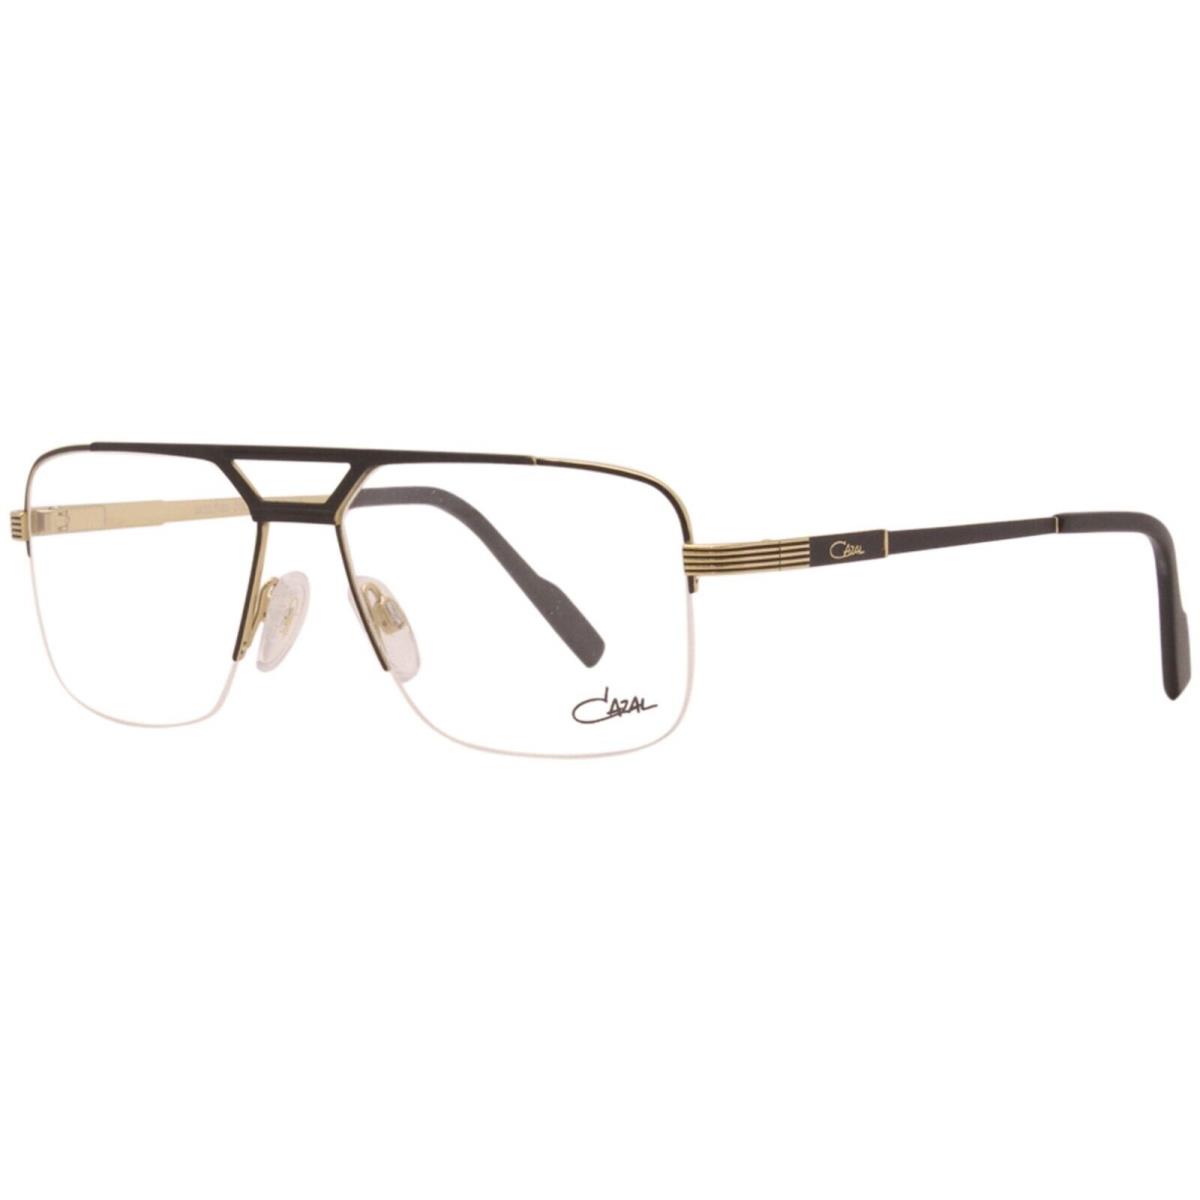 Cazal Eyeglasses 7082 001 Black Gold Half Rim Frames 55MM Rx-able